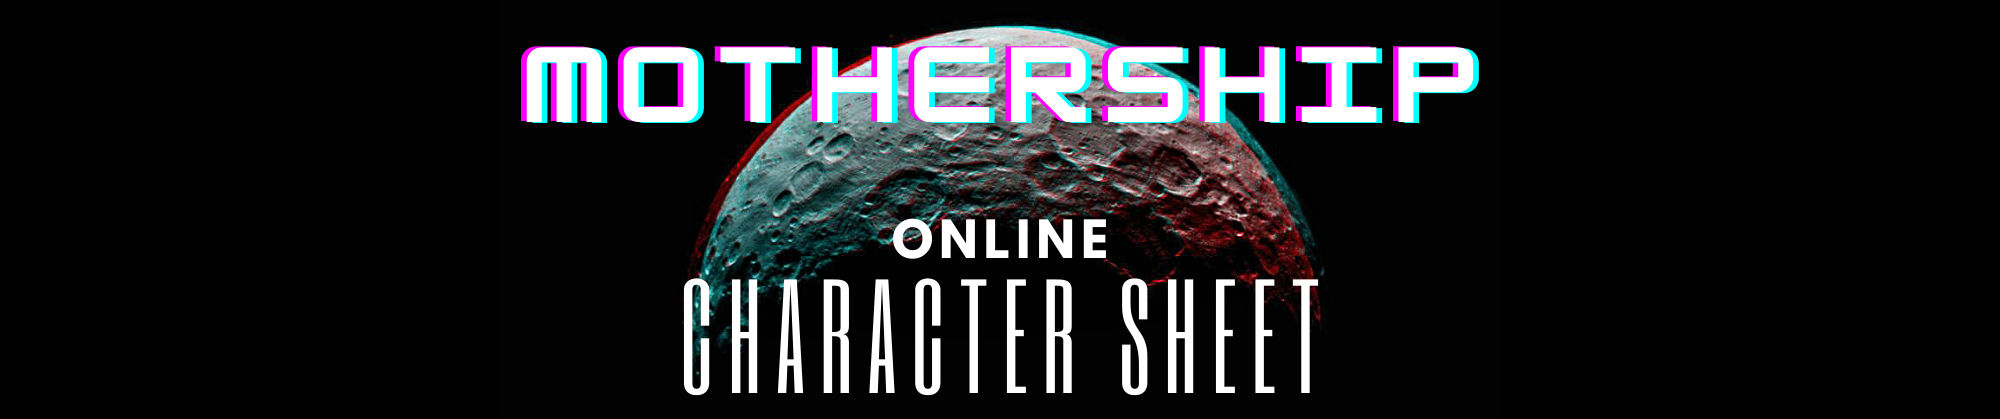 Mothership 0e - Online Character Sheet